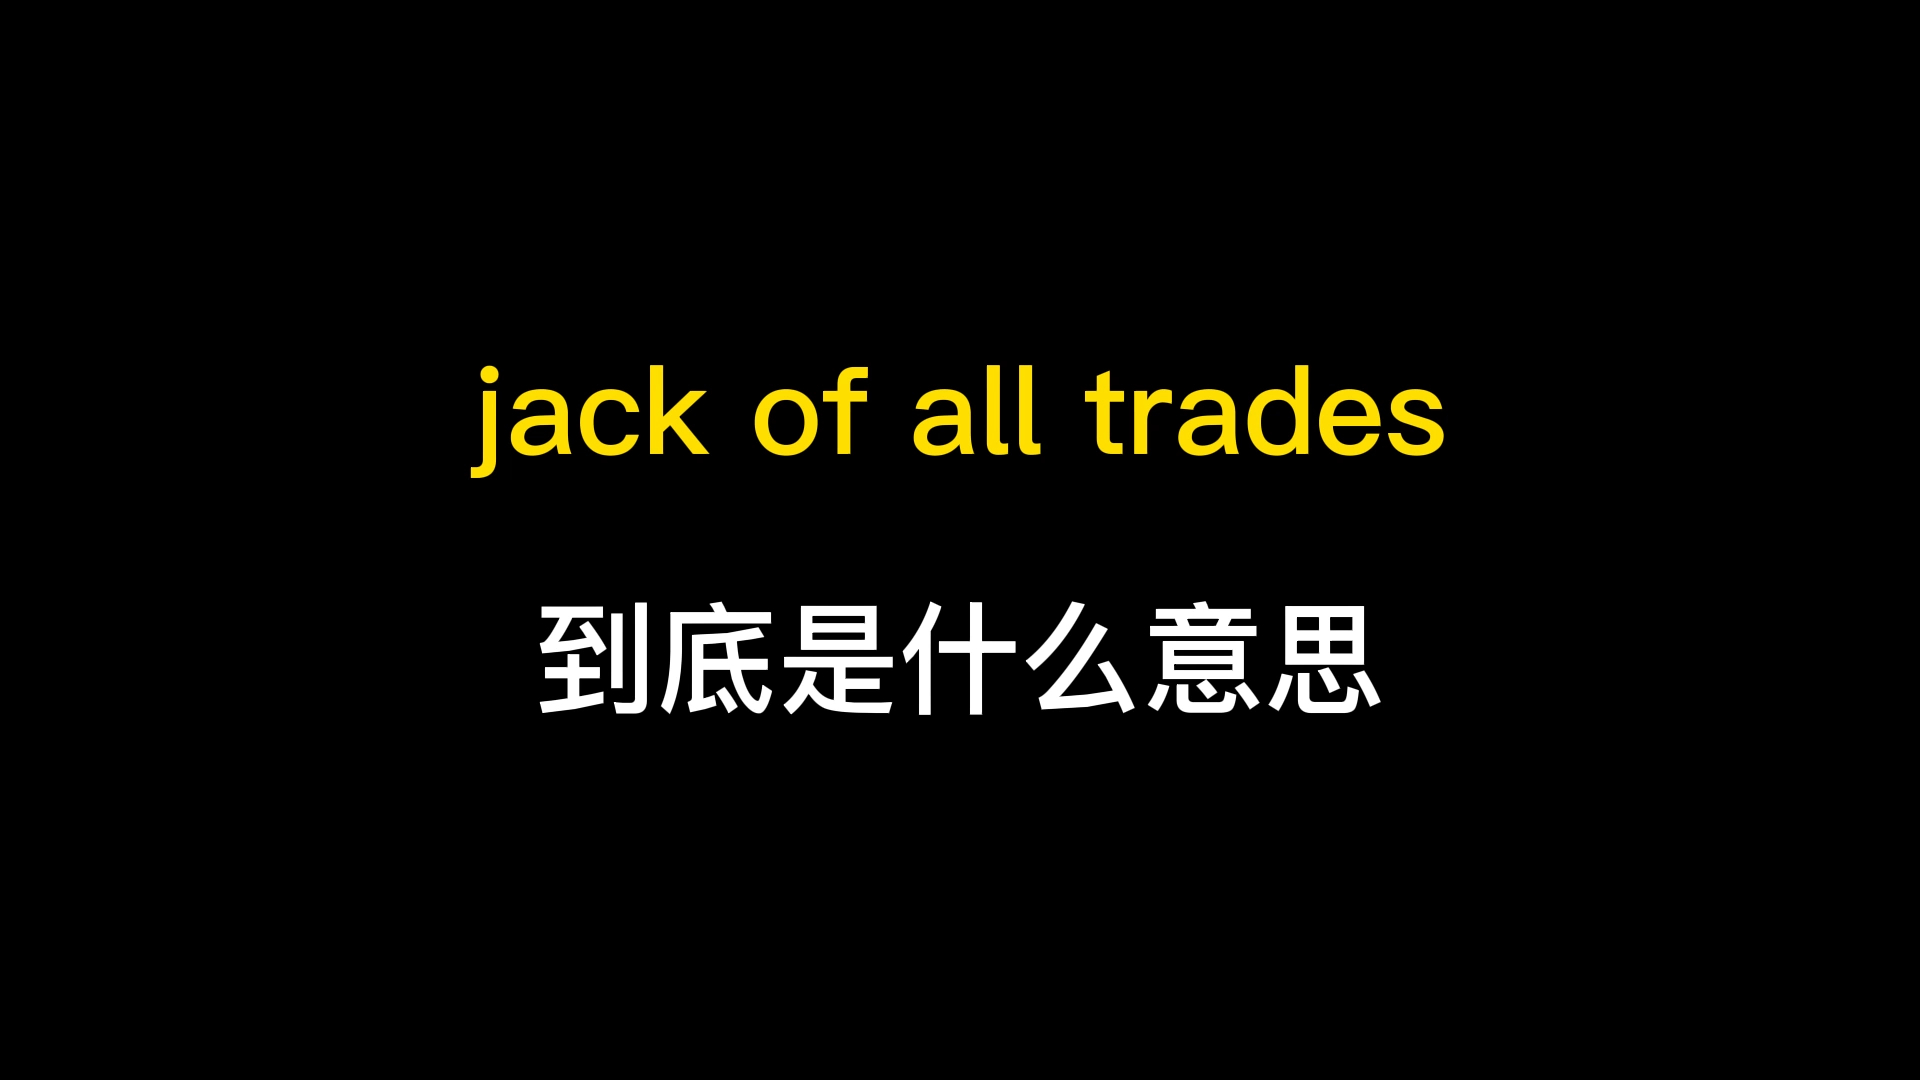 [图]jack of all trades到底是什么意思？